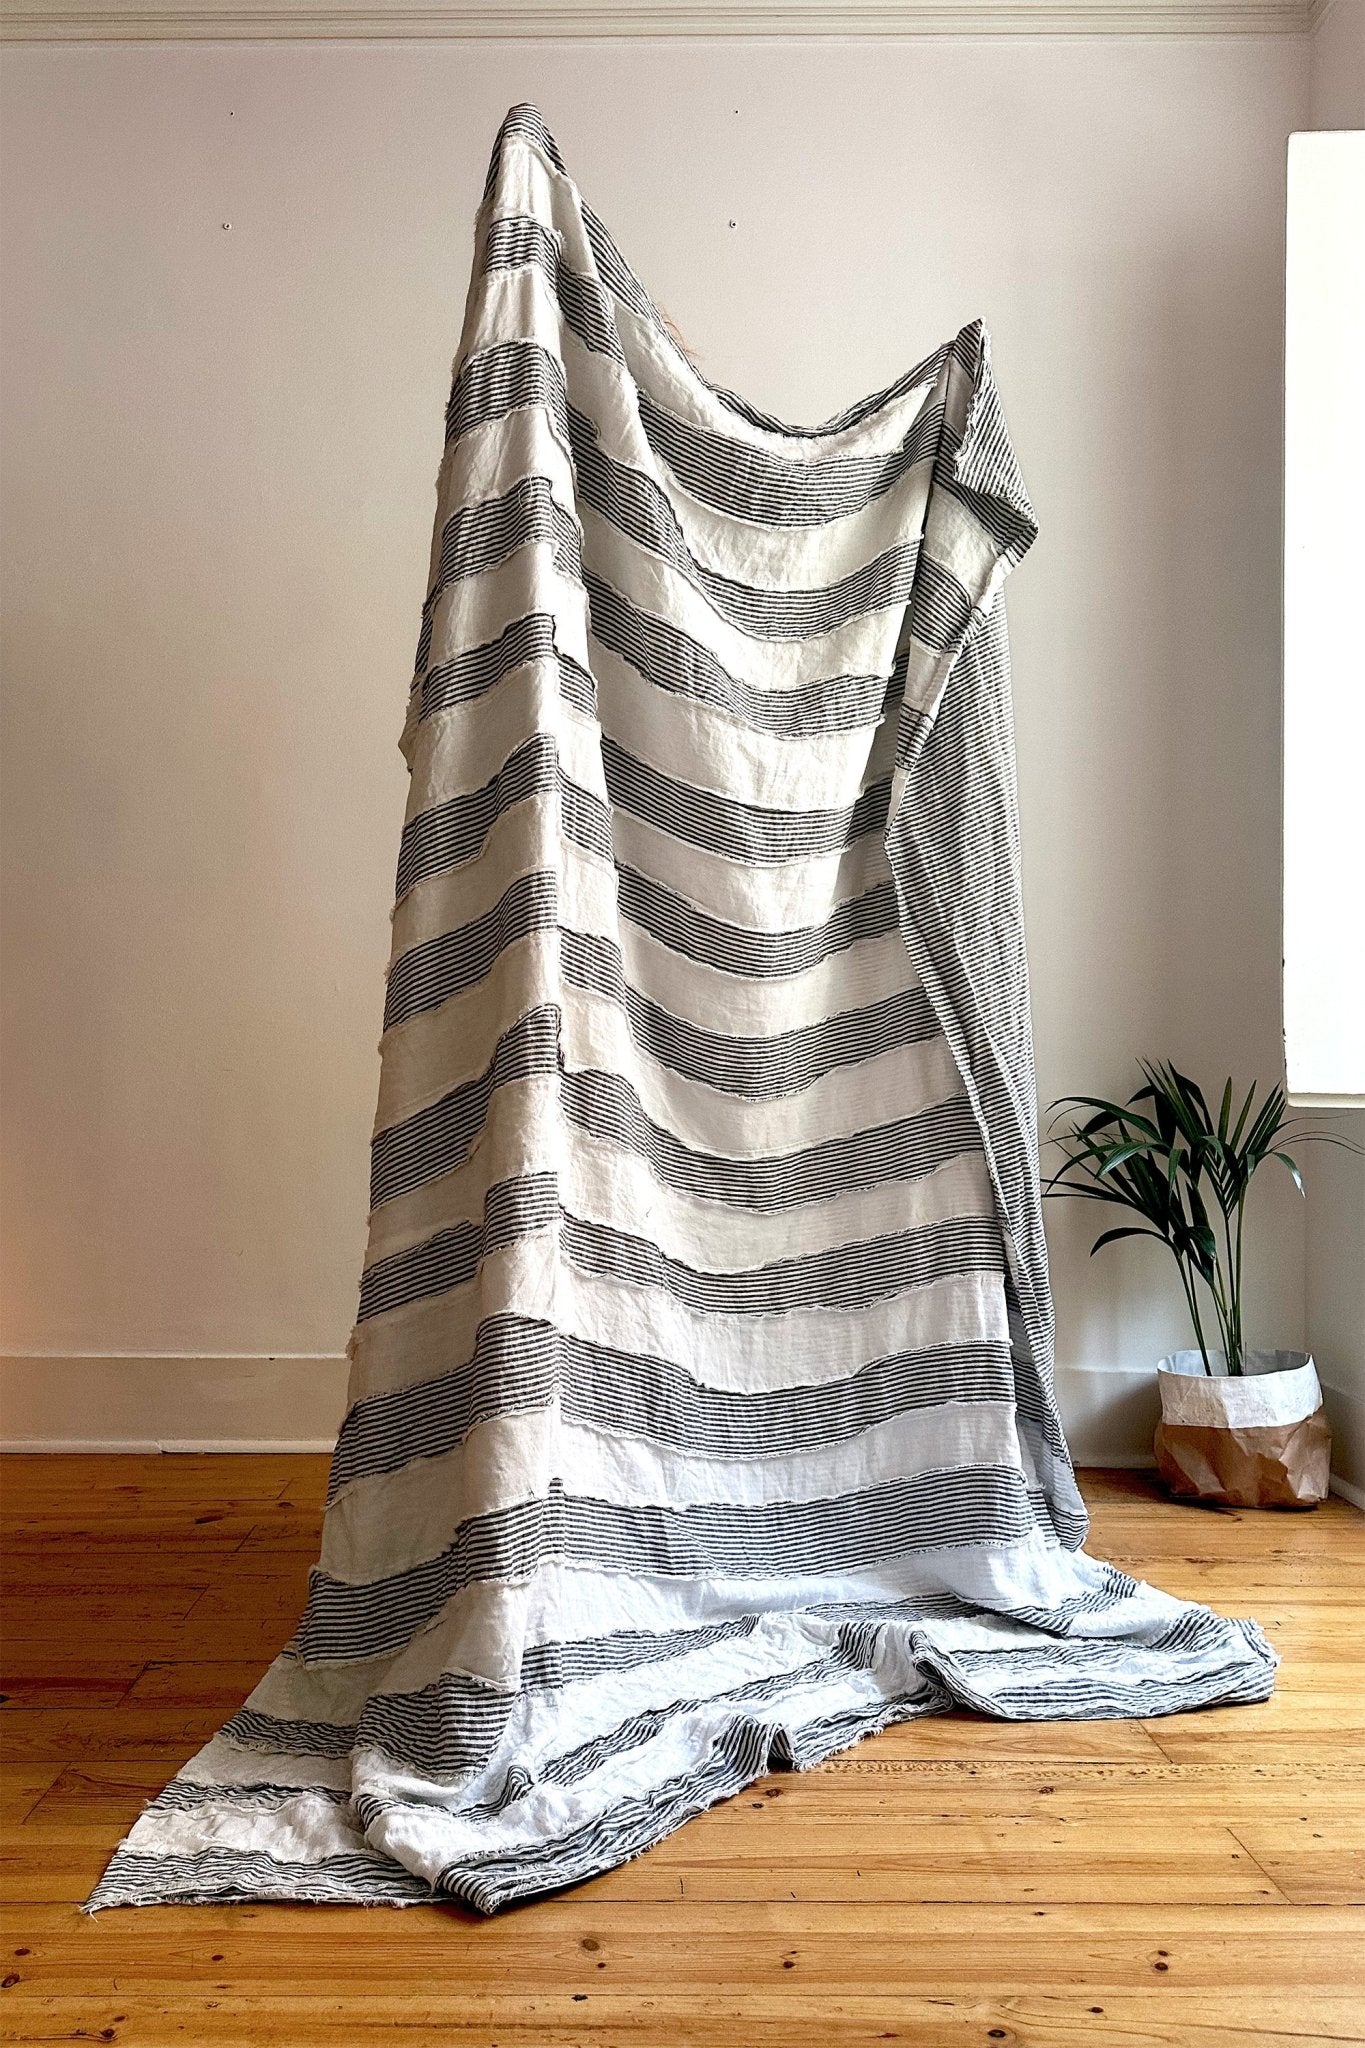 Grey and White Striped Linen Bedspread - Biggs & Hill - Linen Bedspread - Bedspread - blanket - Extra Large